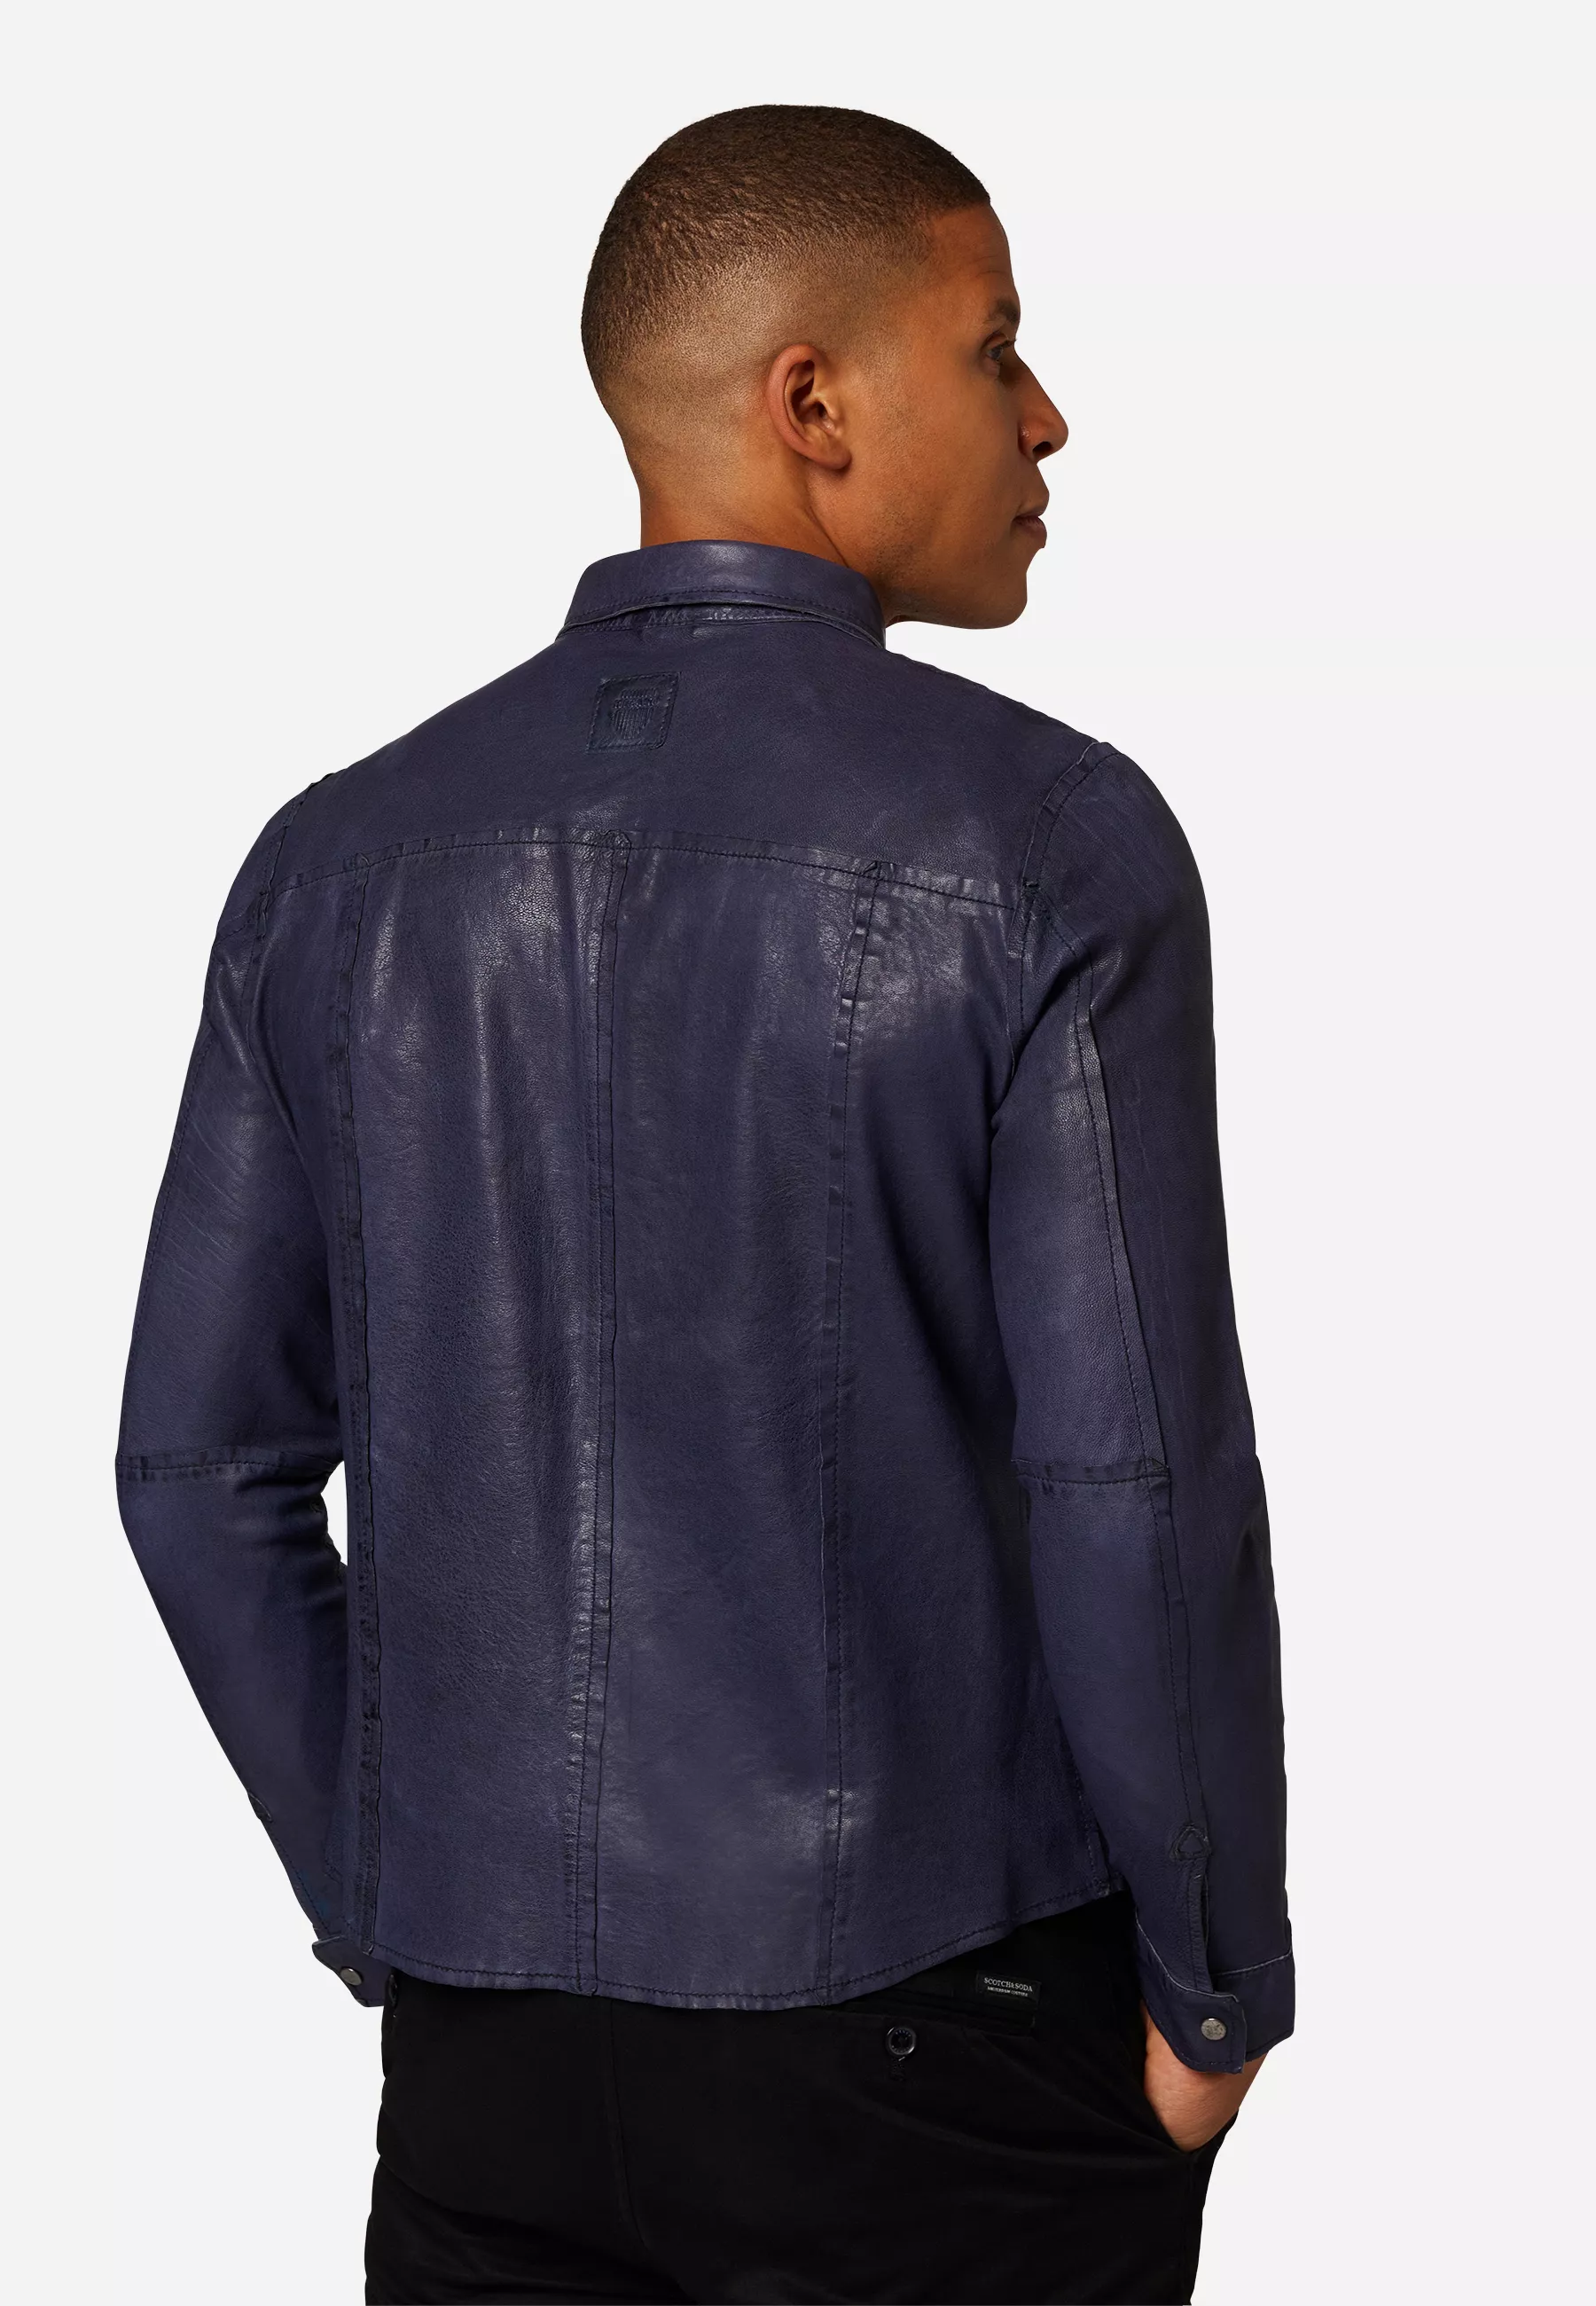 Herren Lederjacke Reverse Shirt Glattleder in Blau von Ricano, Rückansicht am Model